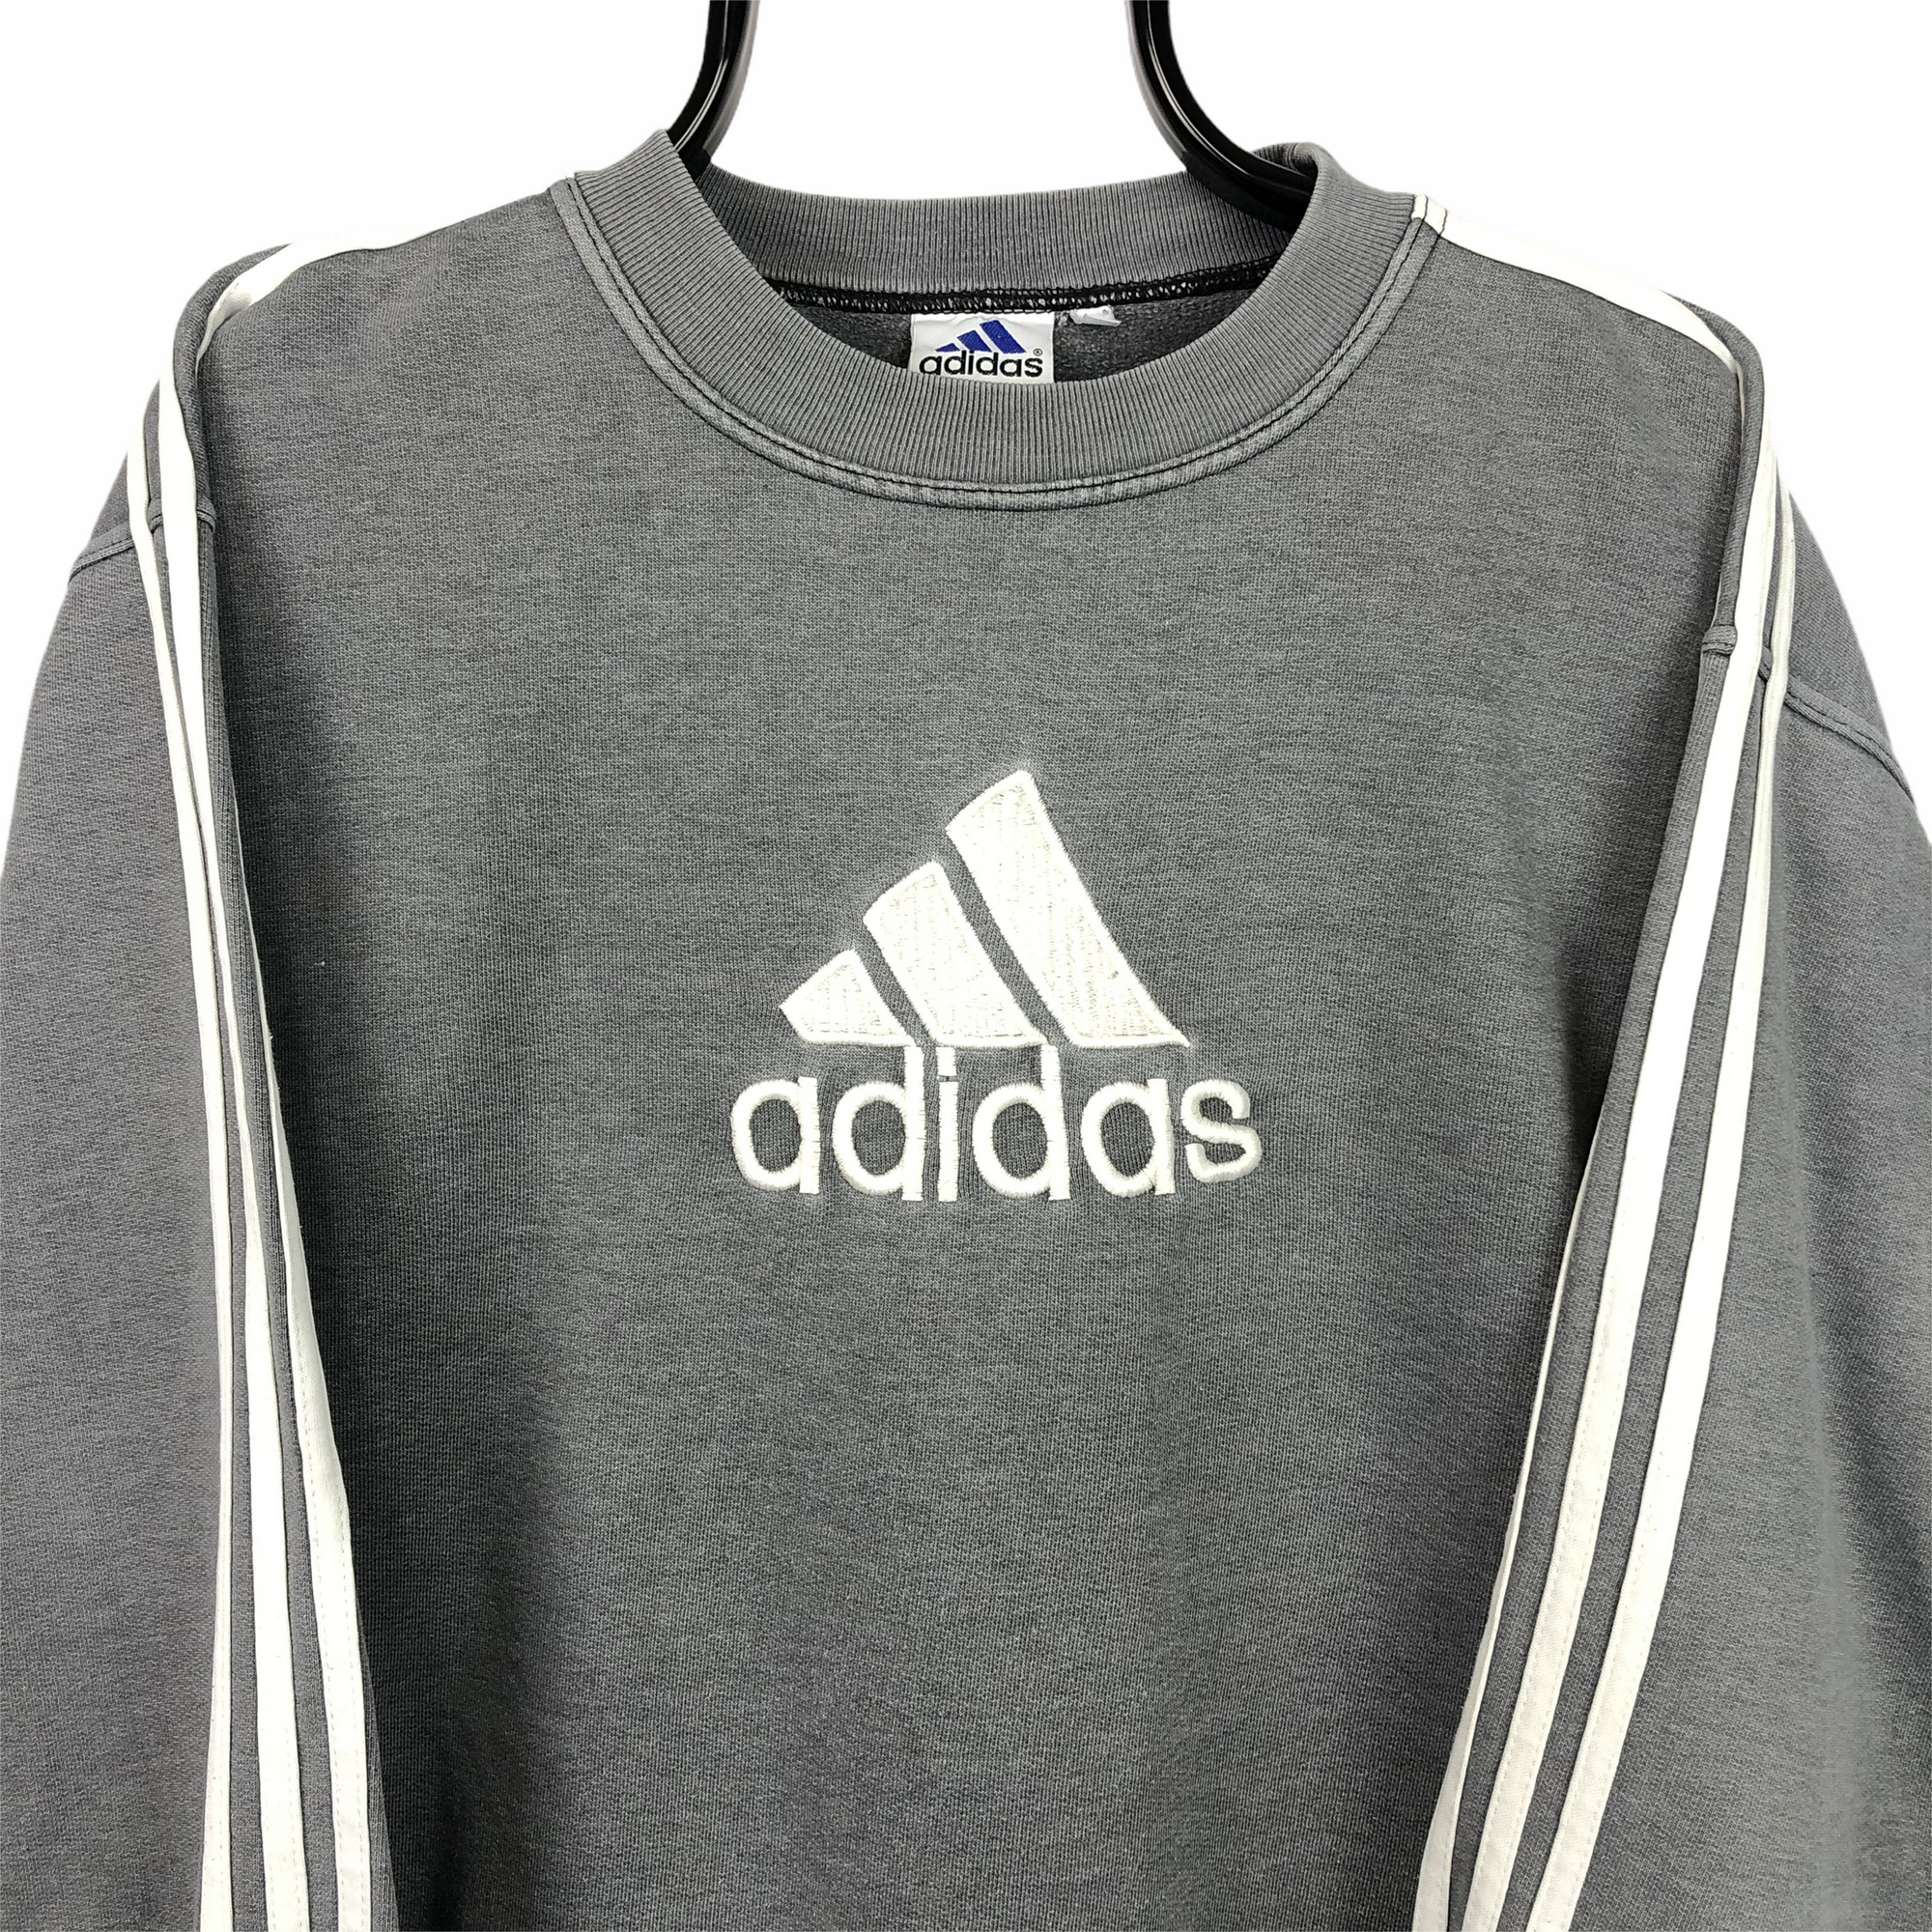 Vintage 90s Adidas Spellout Sweatshirt in Grey & White - Men's Small/Women's Medium